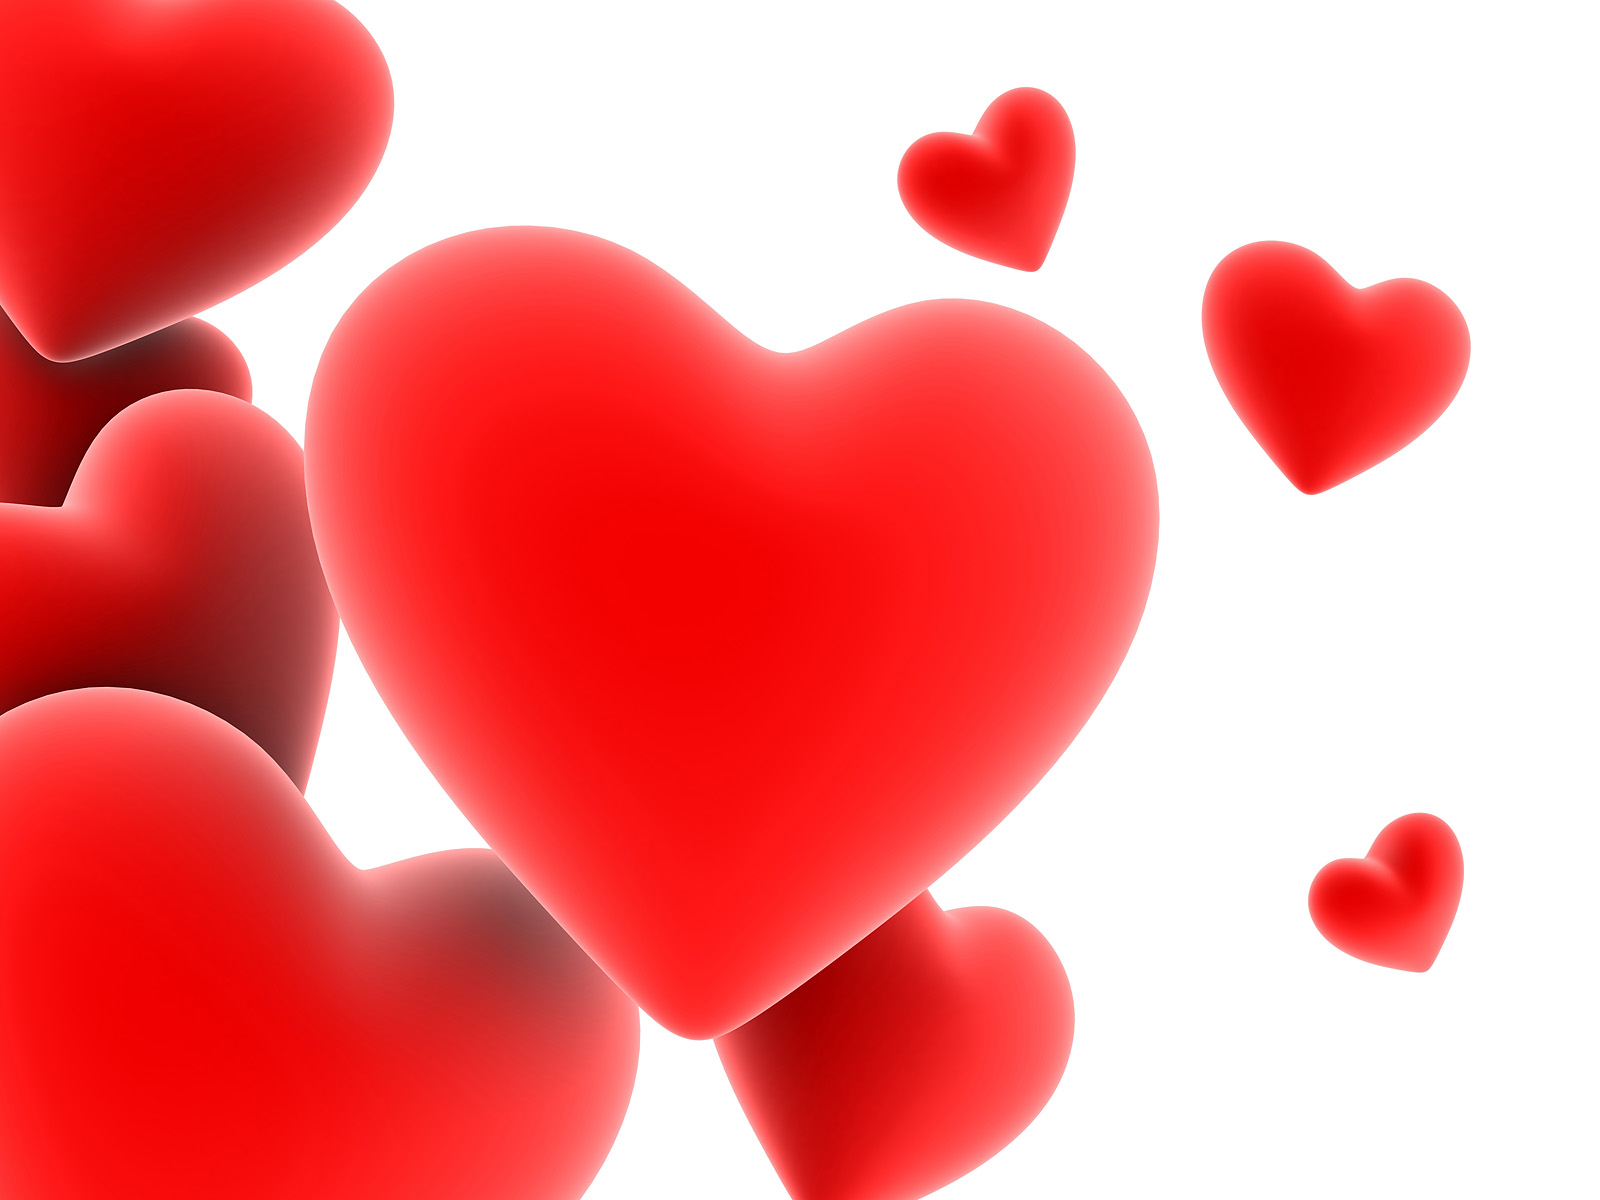 heart wallpaper,heart,red,love,valentine's day,heart